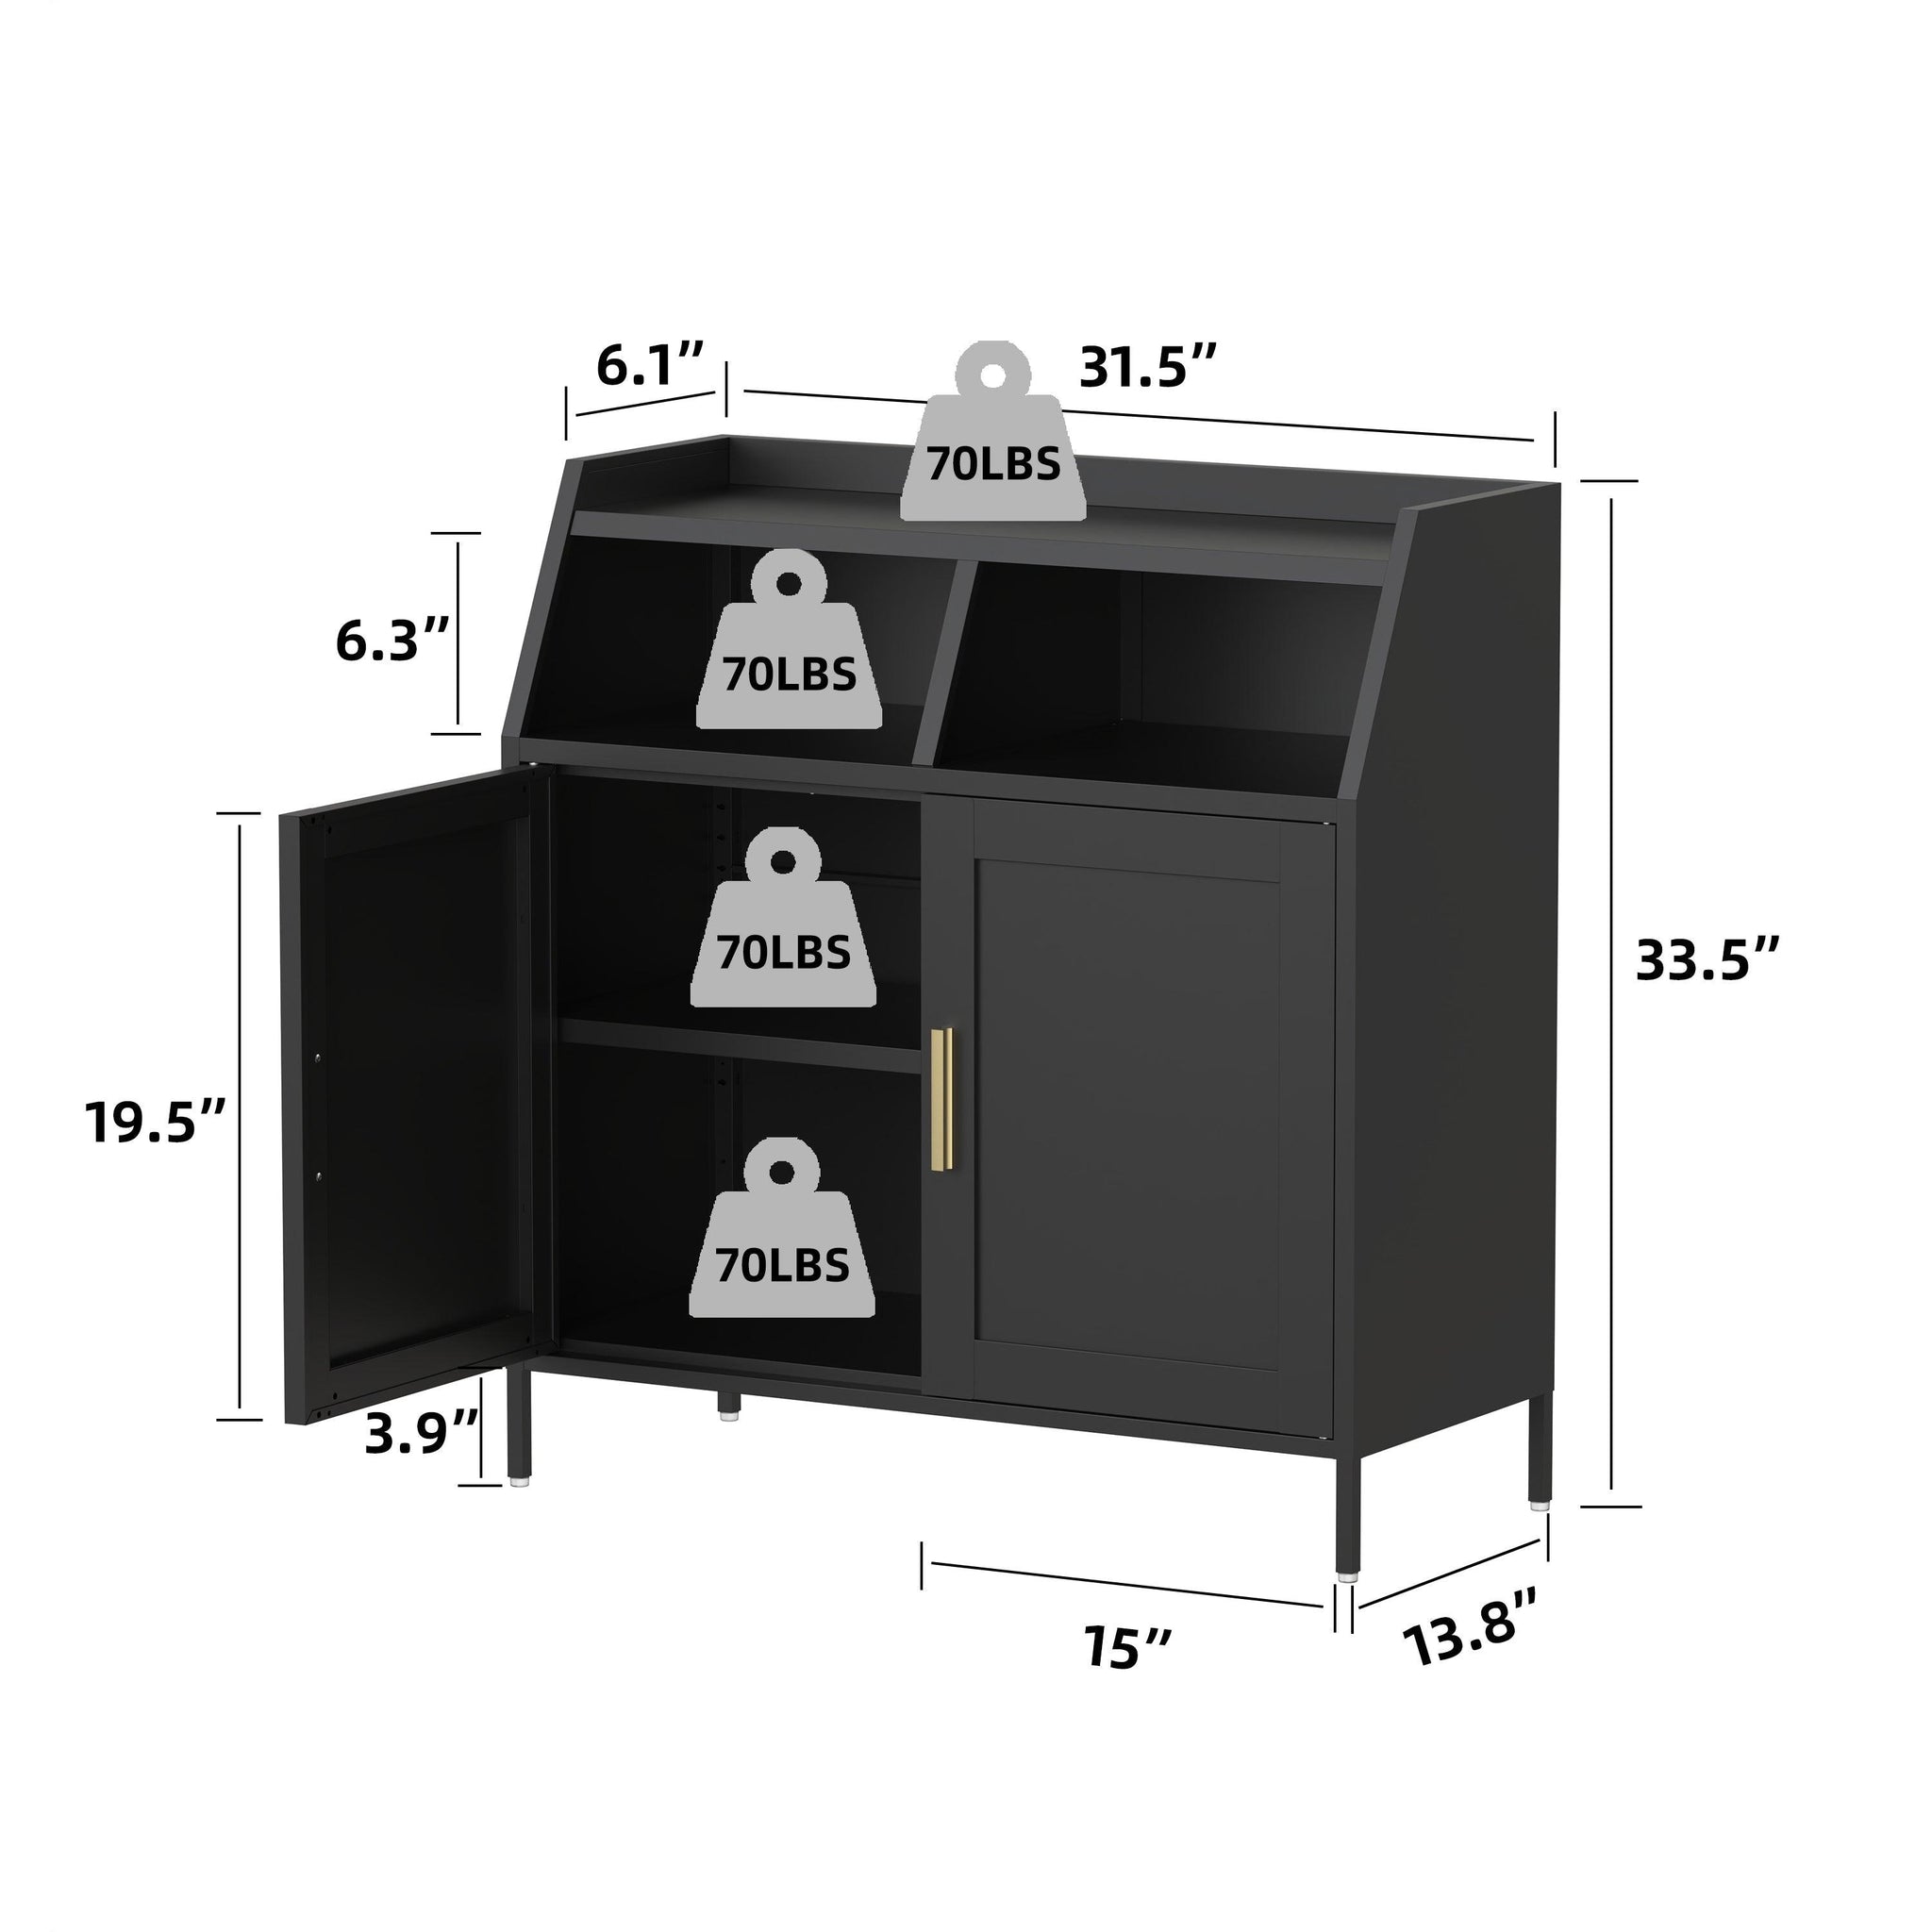 RaDEWAY Metal Buffet Sideboard Cabinet with Storage and Doors